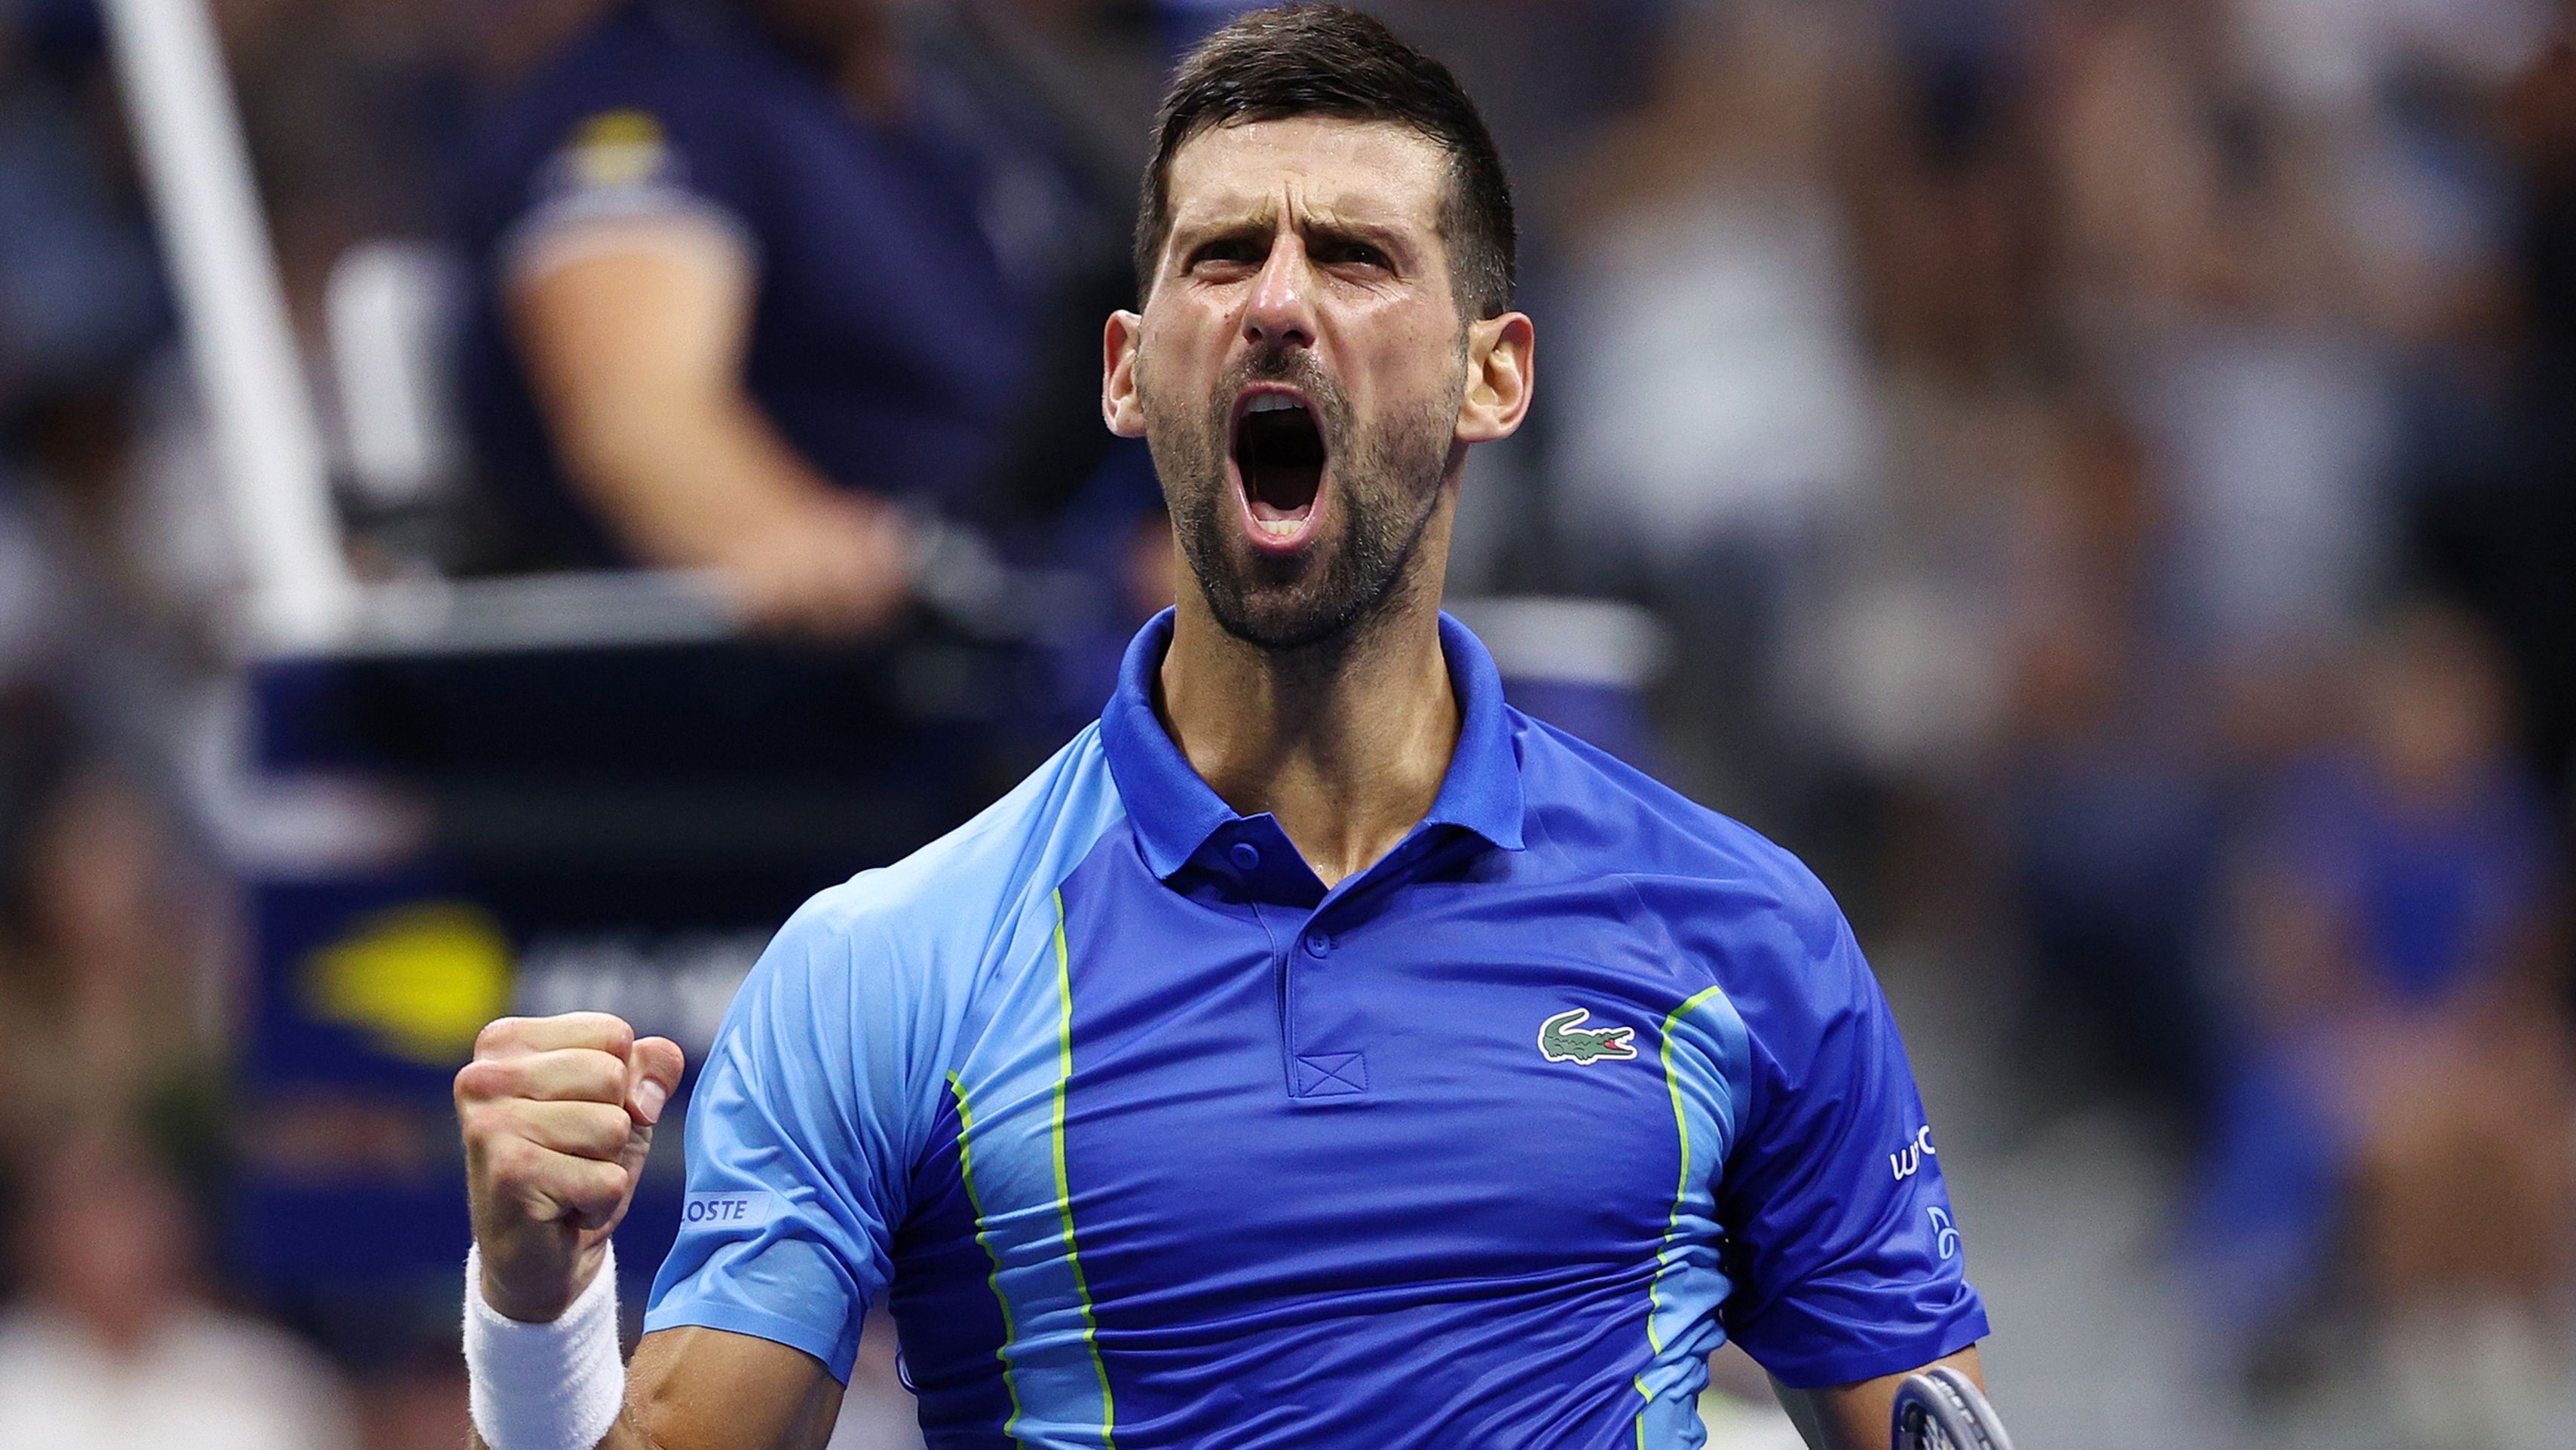 Novak Djokovic of Serbia celebrates during the US Open final.